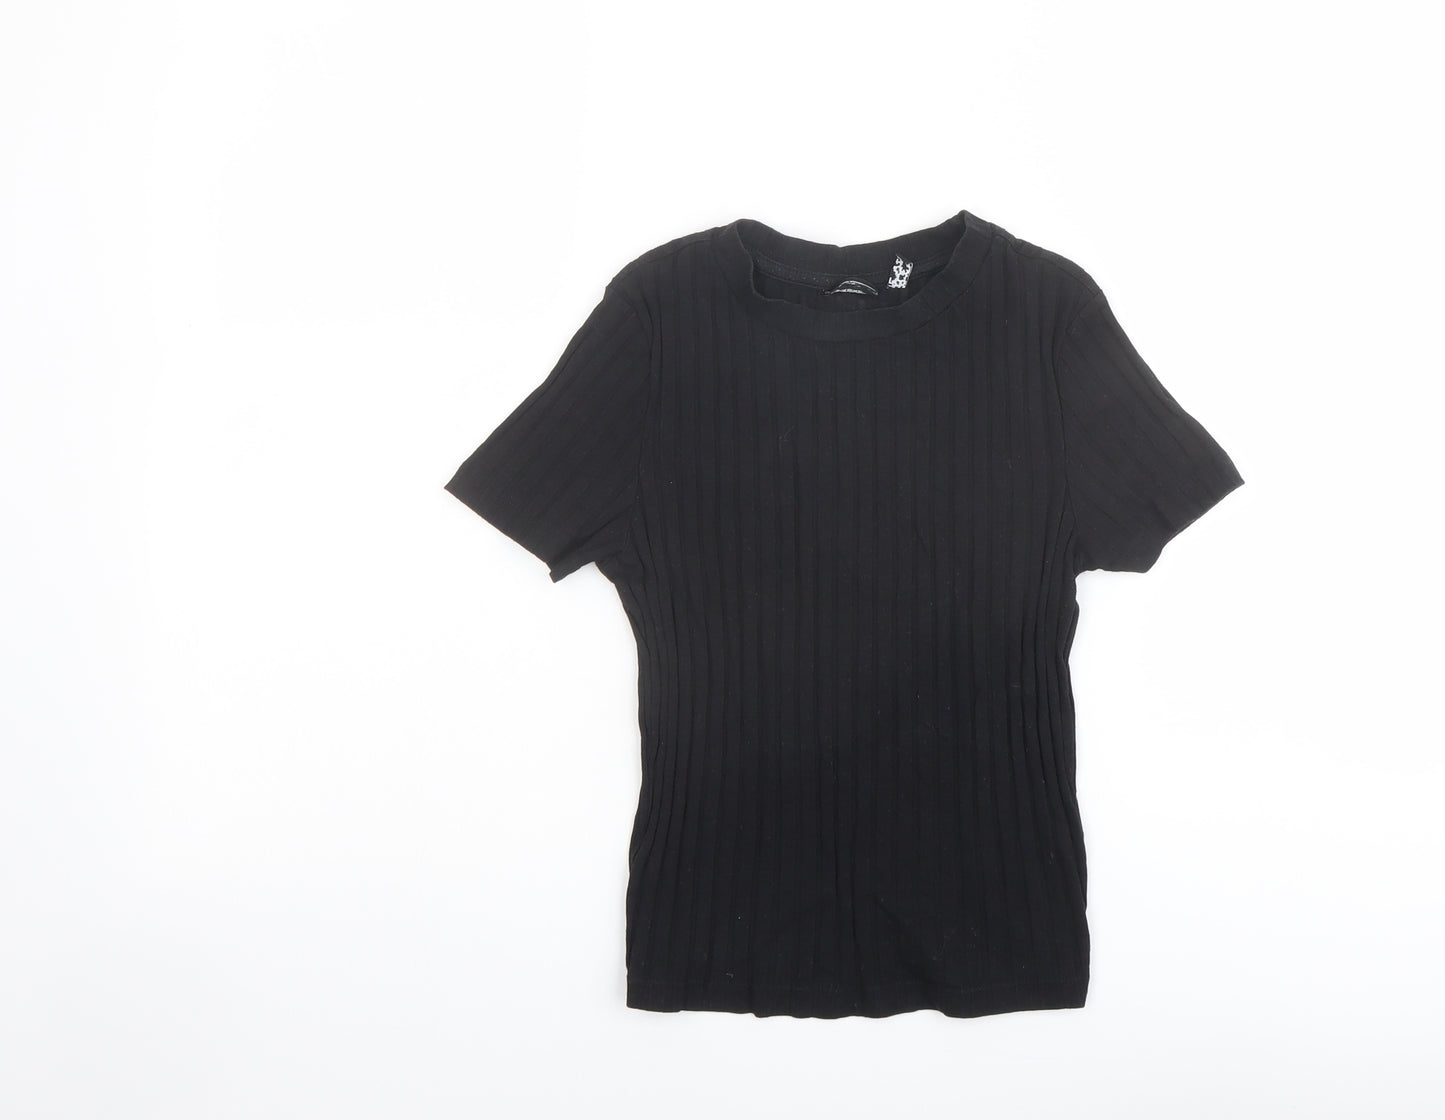 ASOS Womens Black Cotton Basic T-Shirt Size 6 Round Neck